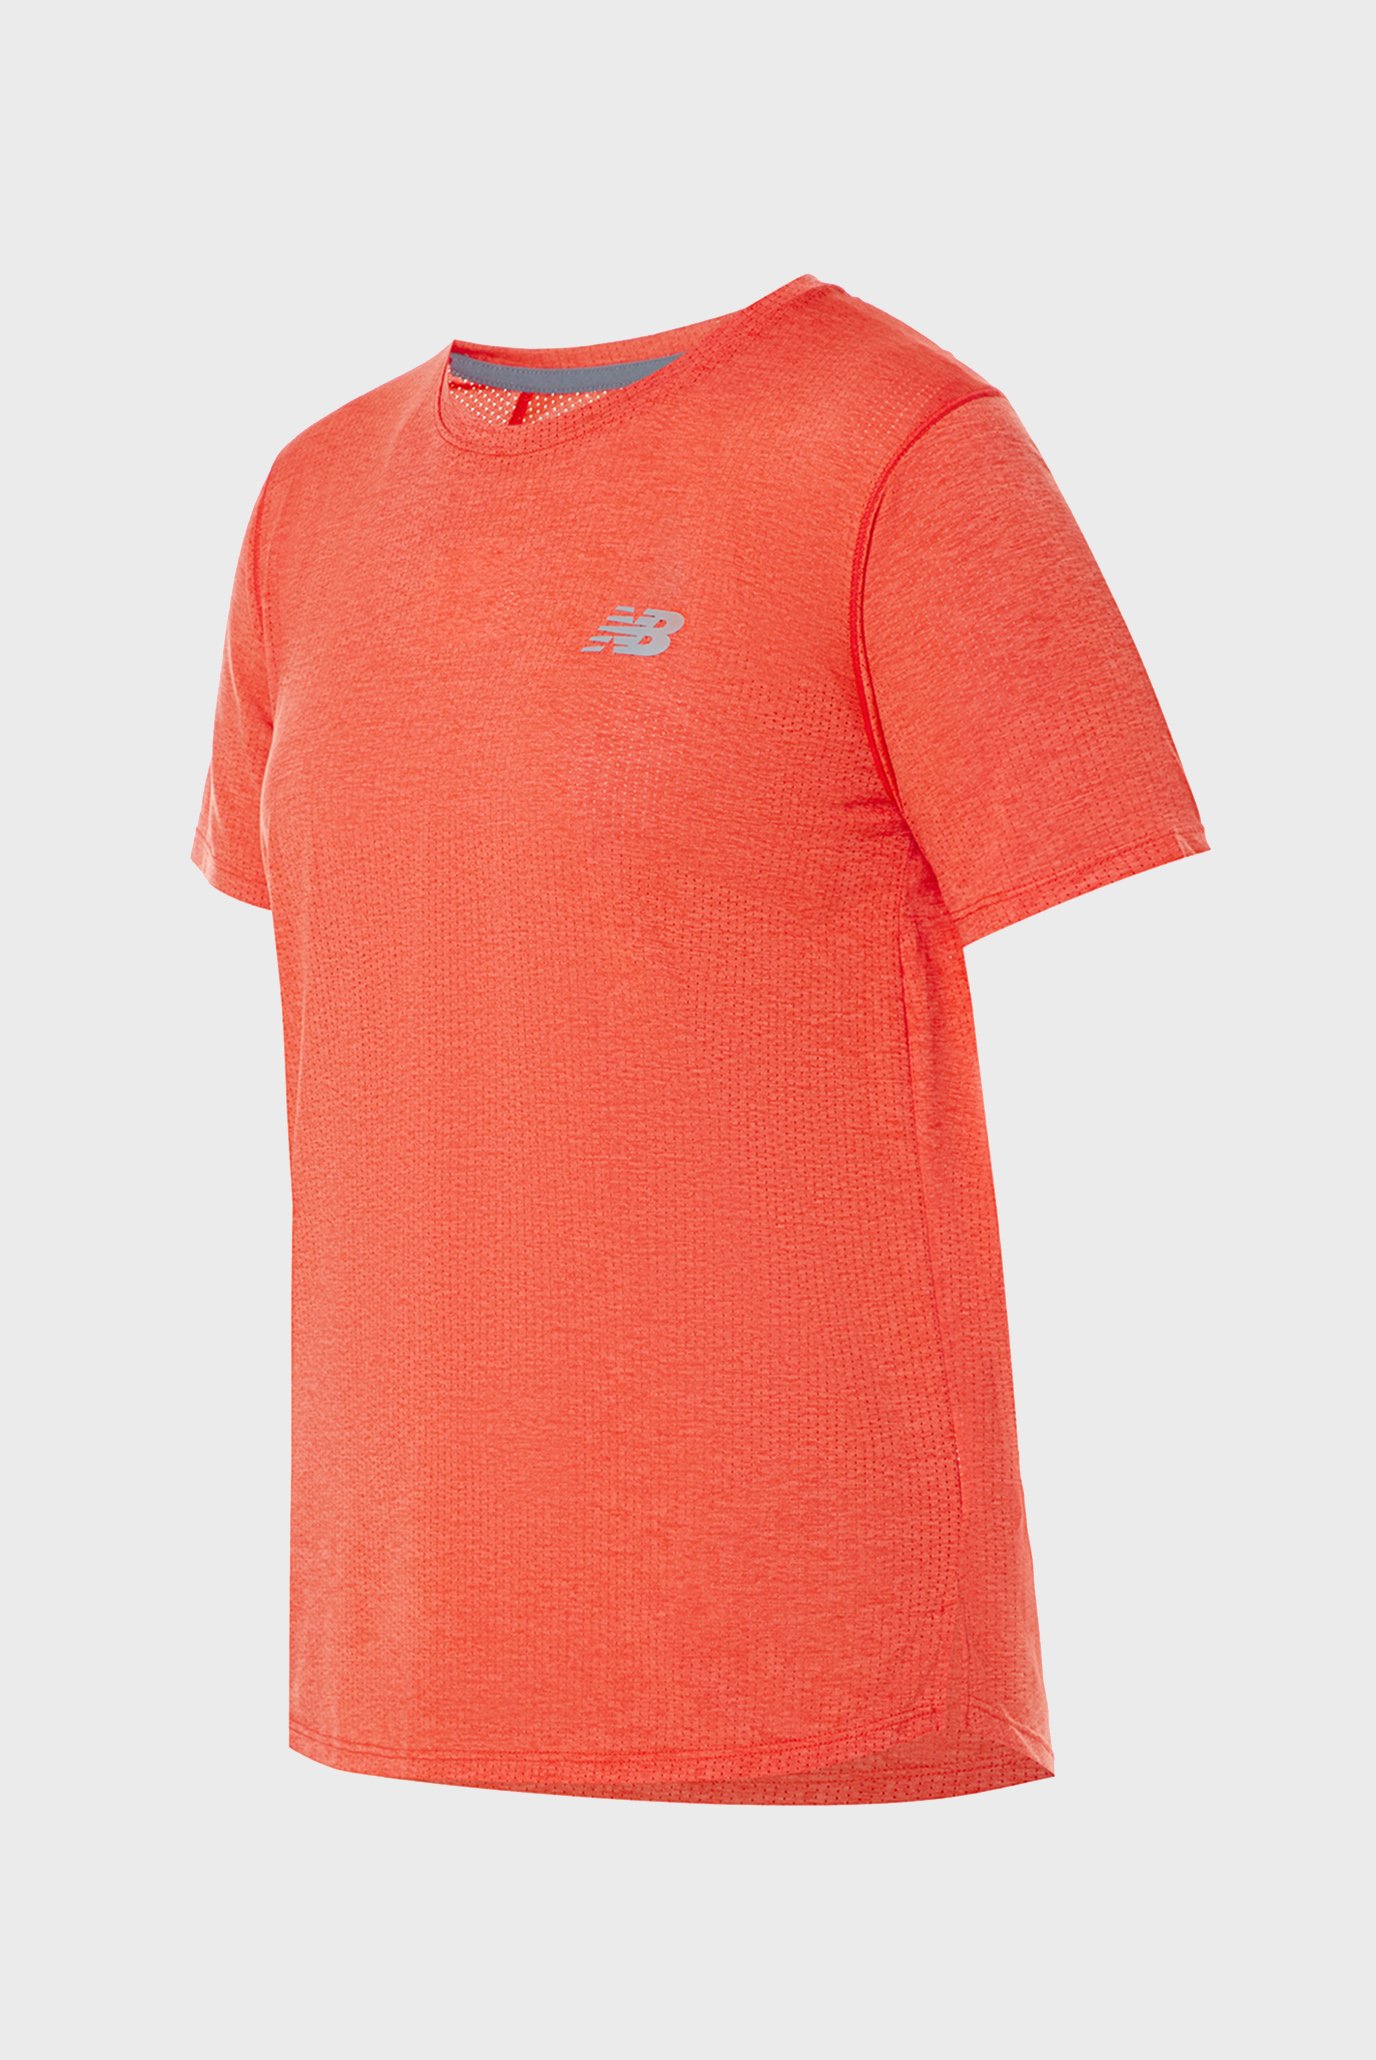 Женская оранжевая футболка NB Performance 1